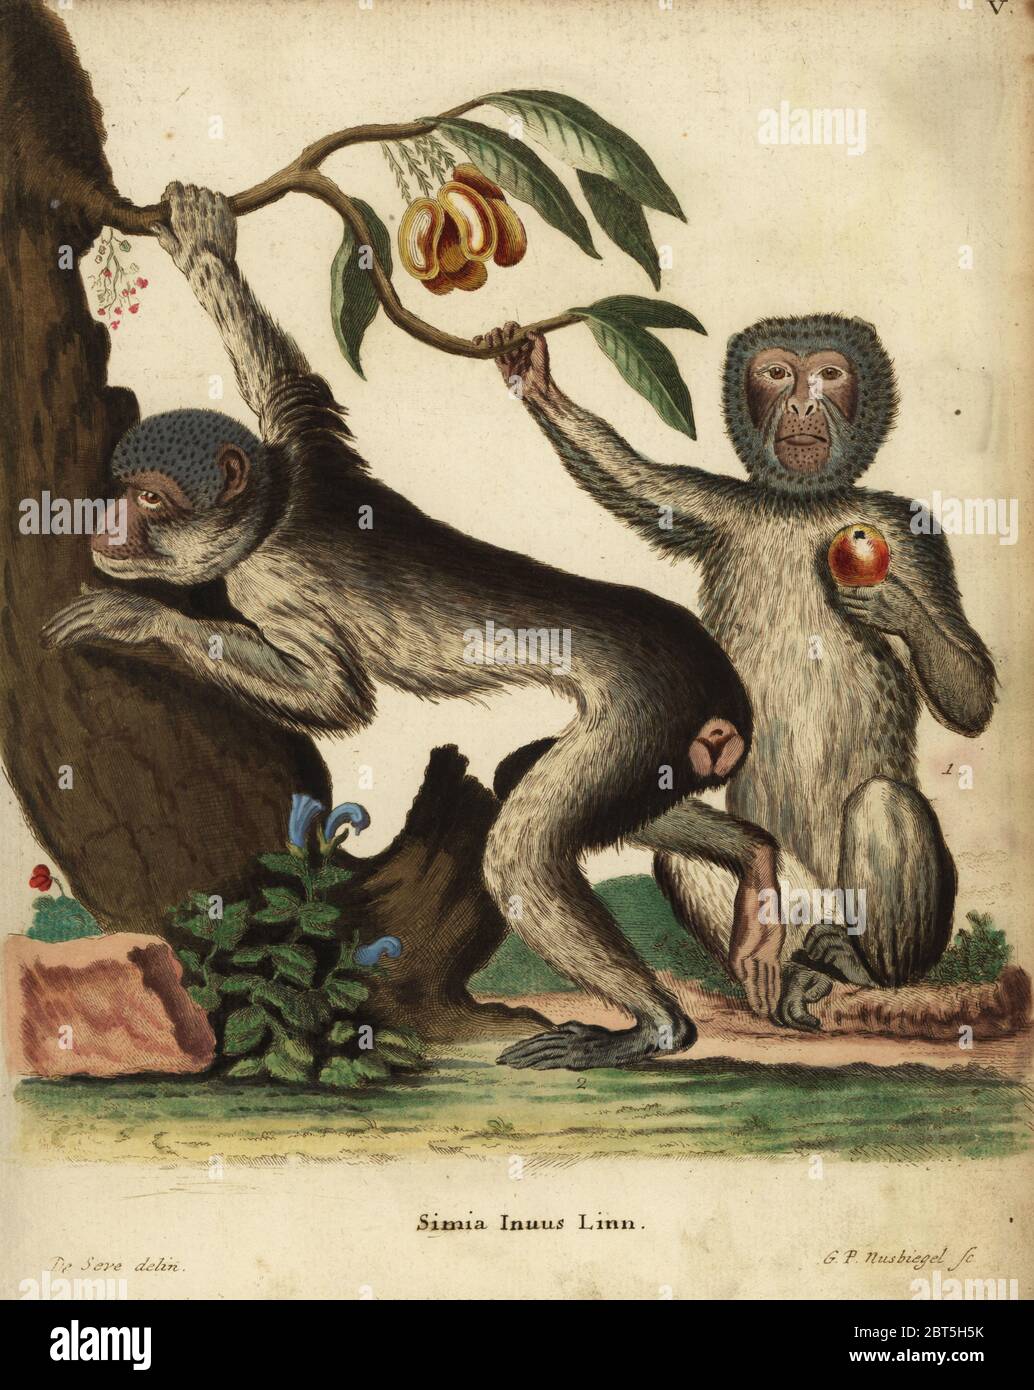 https://c8.alamy.com/comp/2BT5H5K/barbary-ape-or-macaque-macaca-sylvanus-endangered-simia-inuus-linn-handcoloured-copperplate-engraving-by-georg-paul-nussbiegel-after-an-illustration-by-jacques-de-seve-from-johann-christian-daniel-schrebers-animal-illustrations-after-nature-or-schrebers-fantastic-animals-erlangen-germany-1775-2BT5H5K.jpg